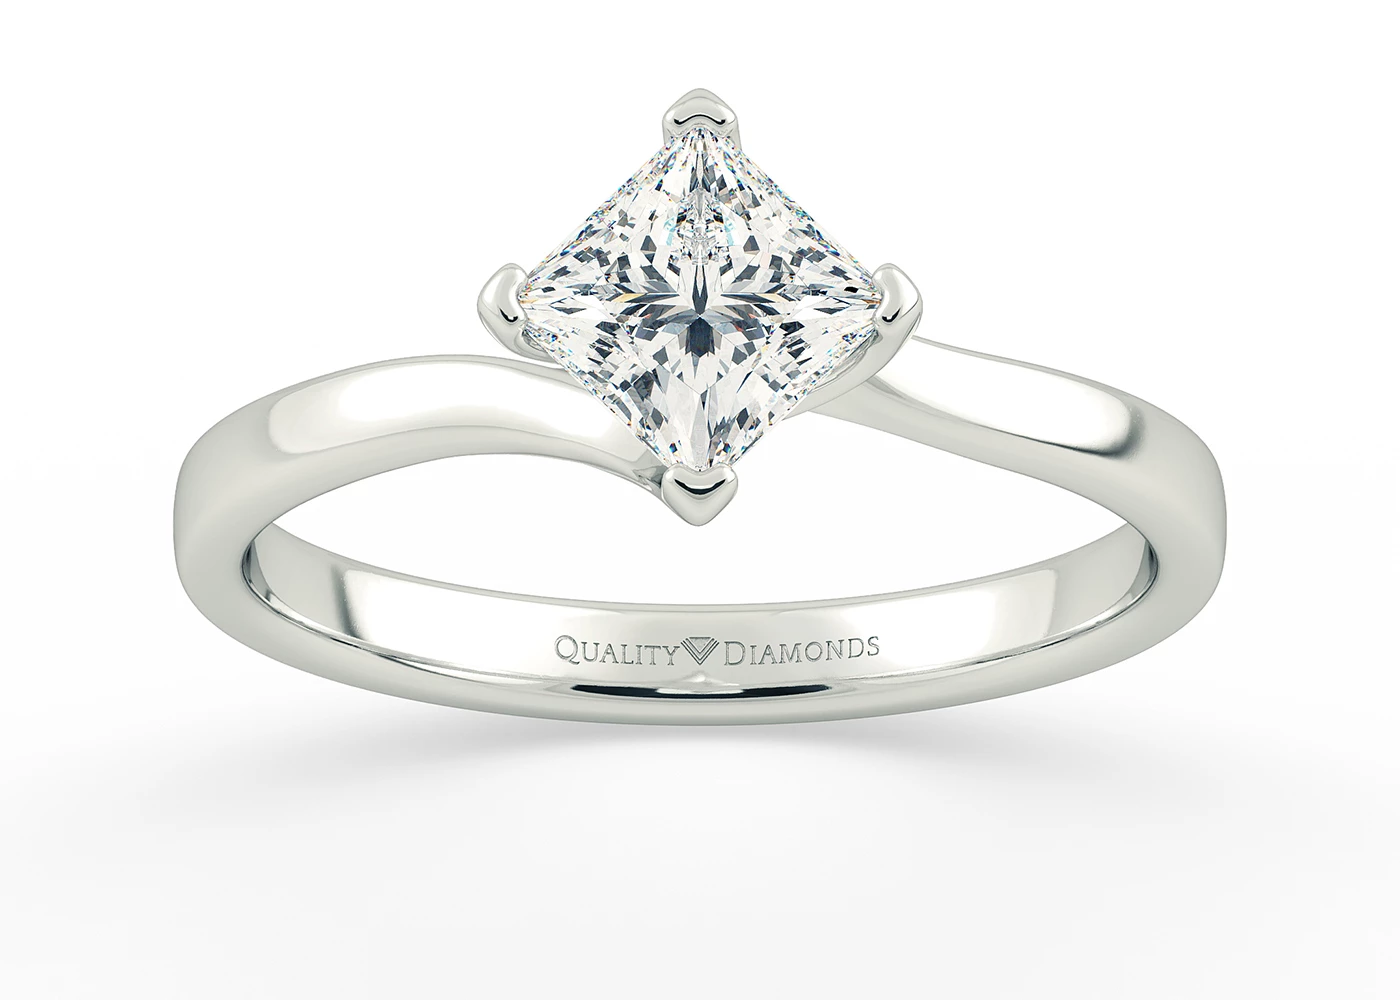 Princess Cura Diamond Ring in Princess 9K White Gold